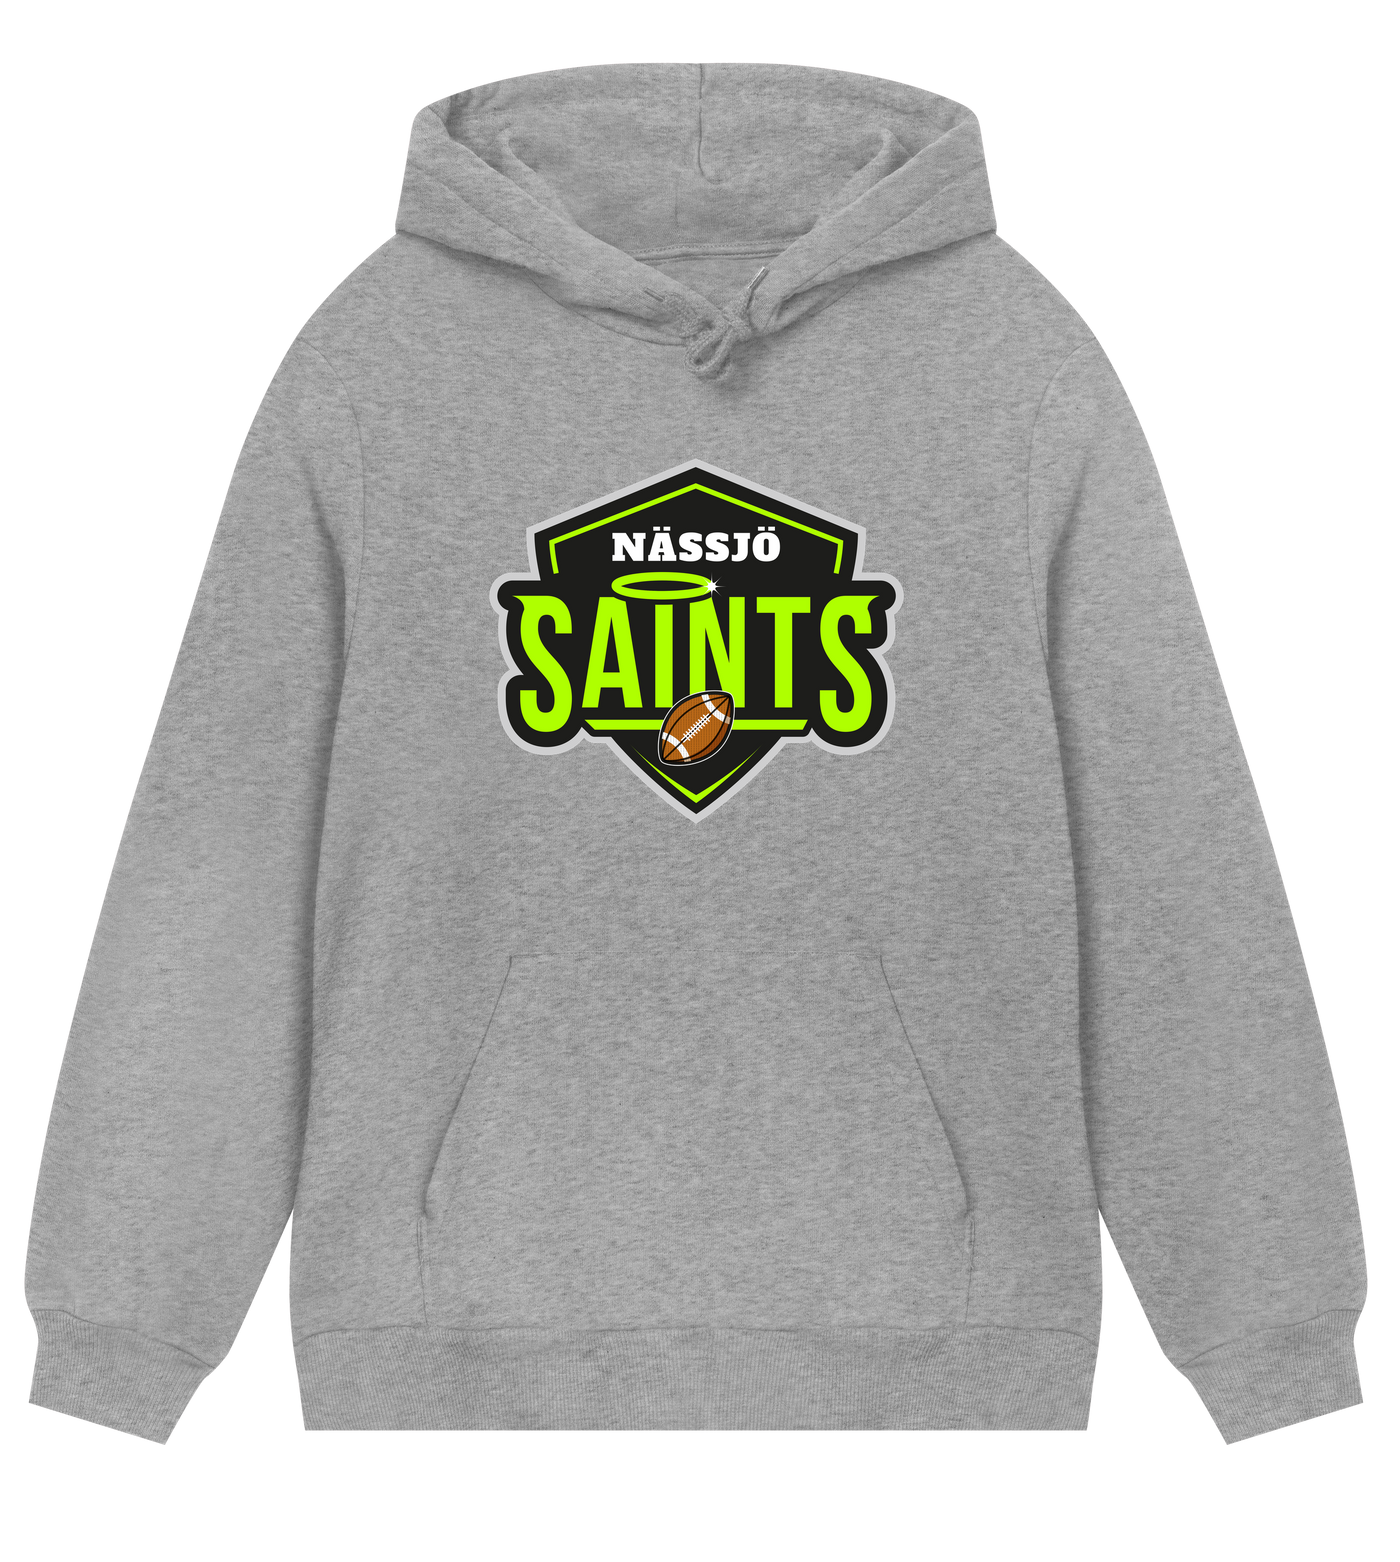 Nässjö Saints Hoodie - Premium hoodie from REYRR STUDIO - Shop now at Reyrr Athletics